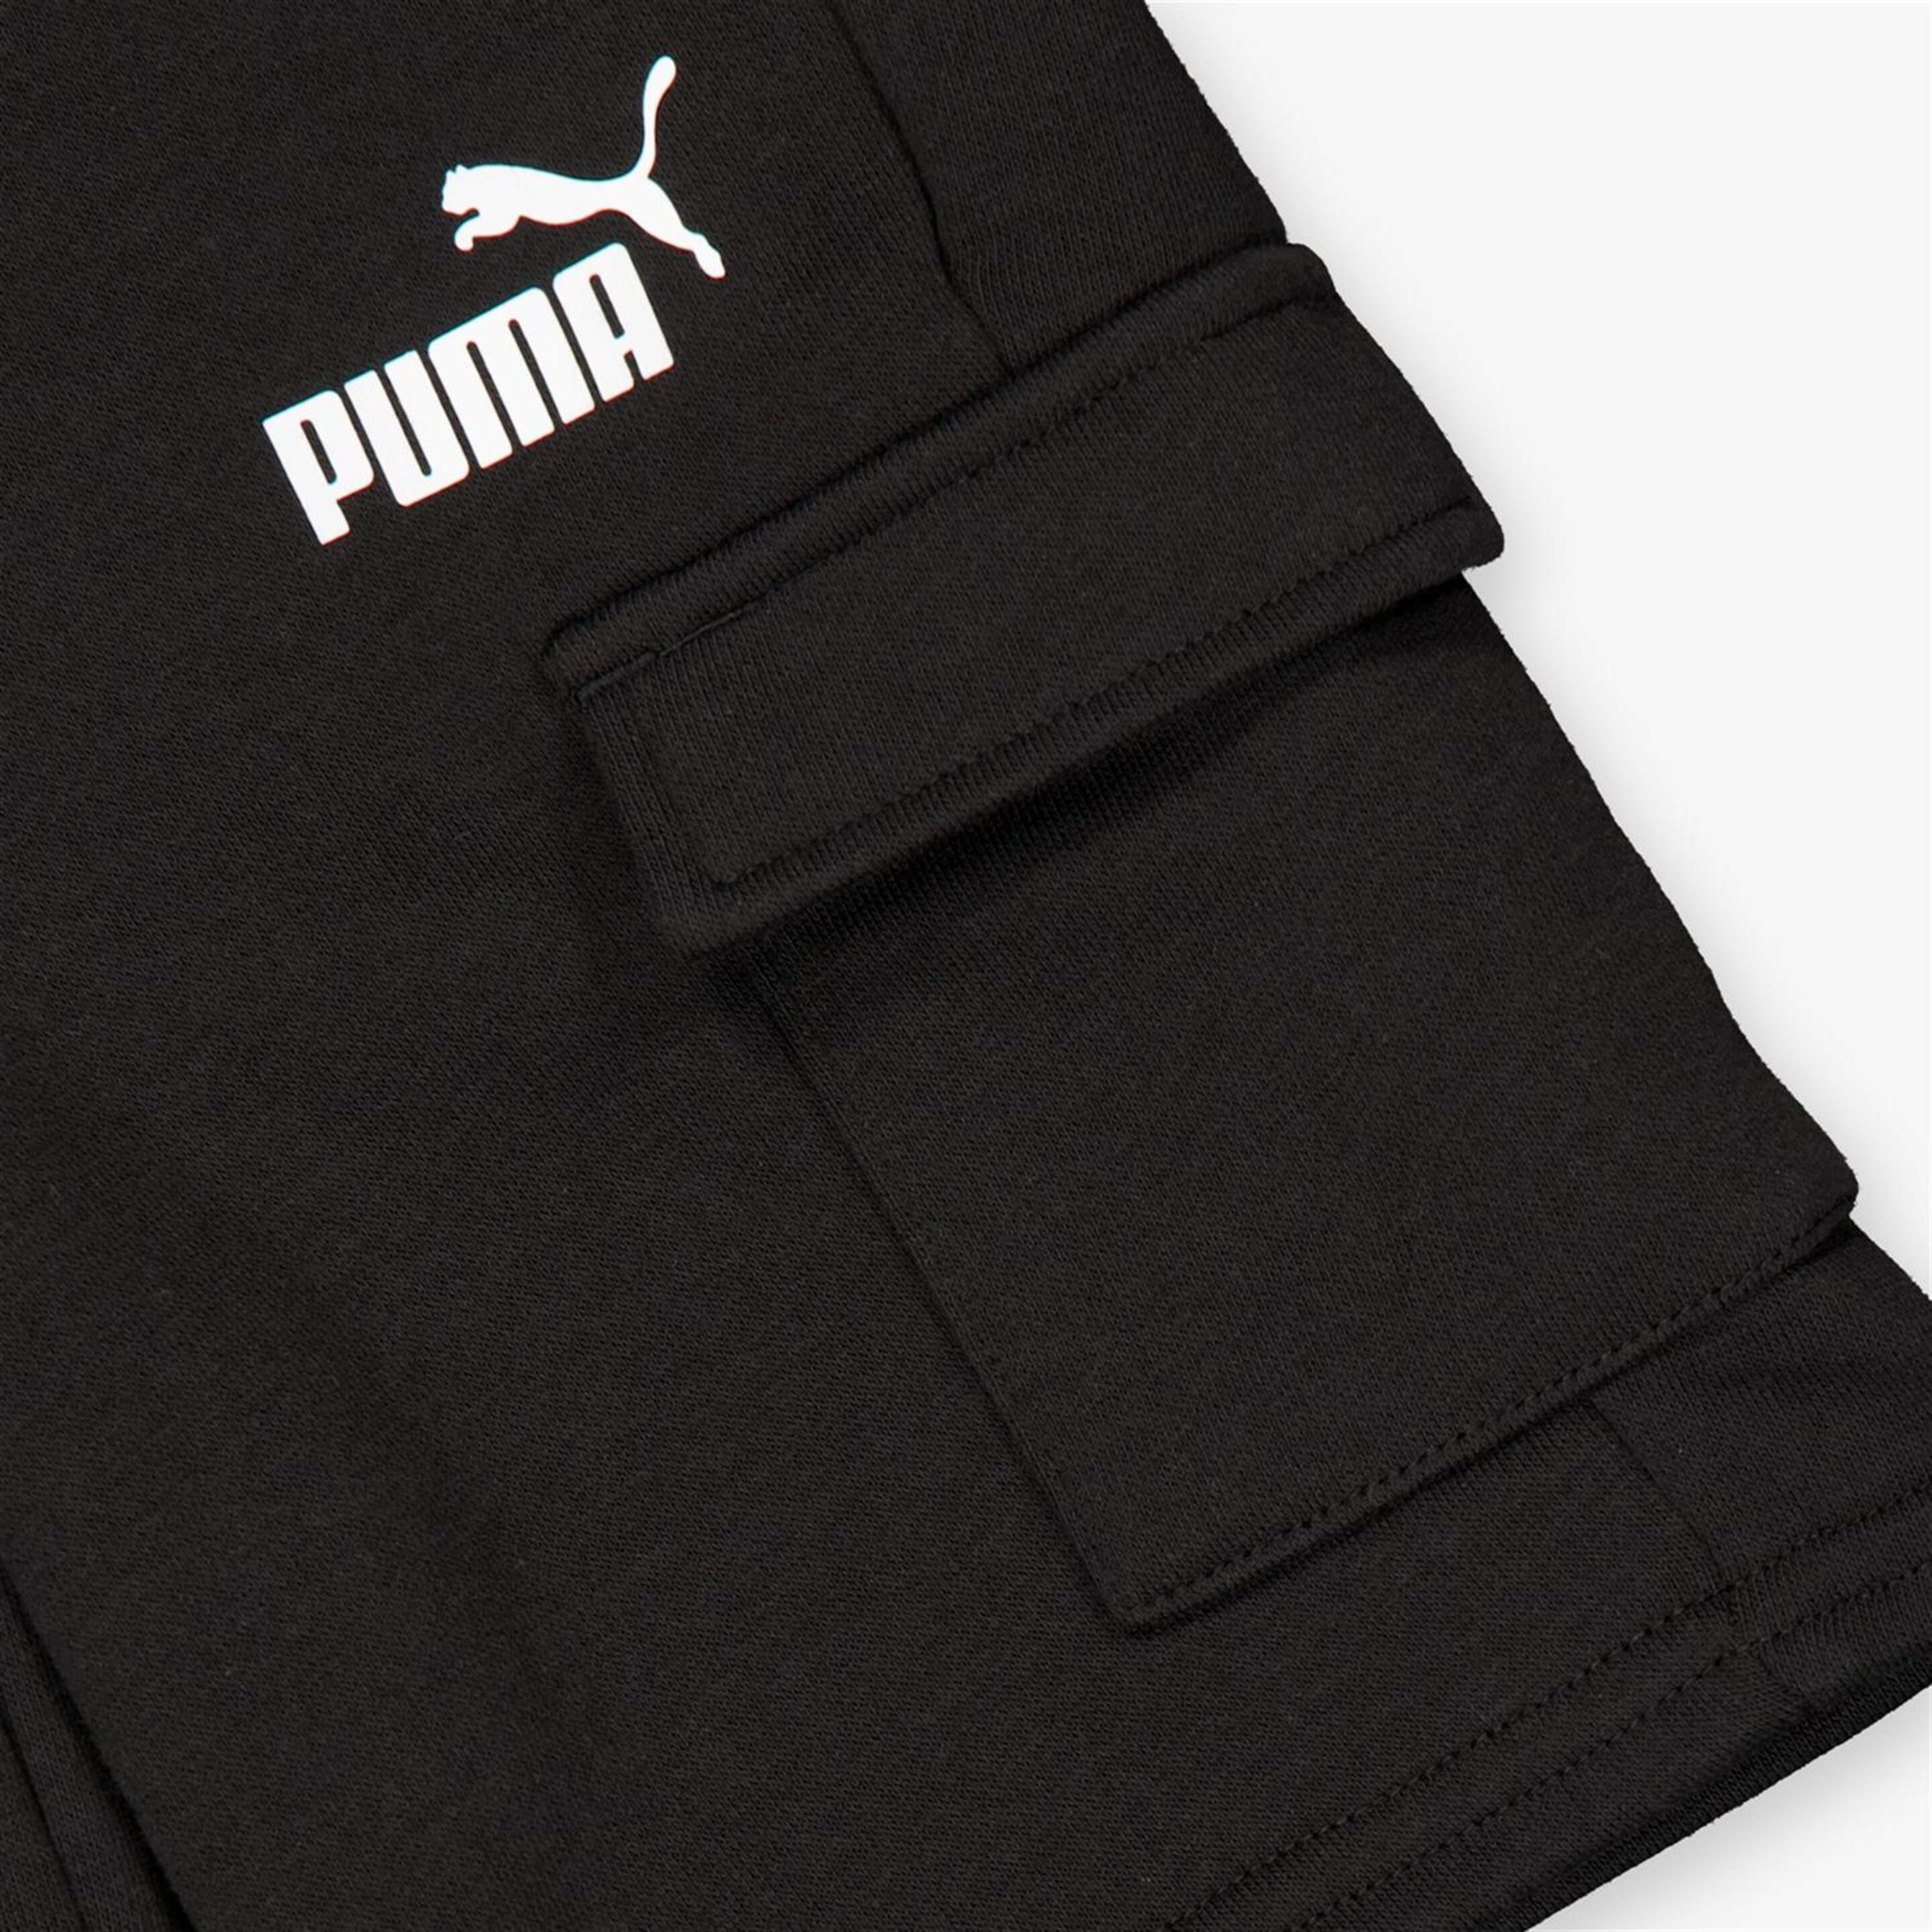 Pantalón Puma